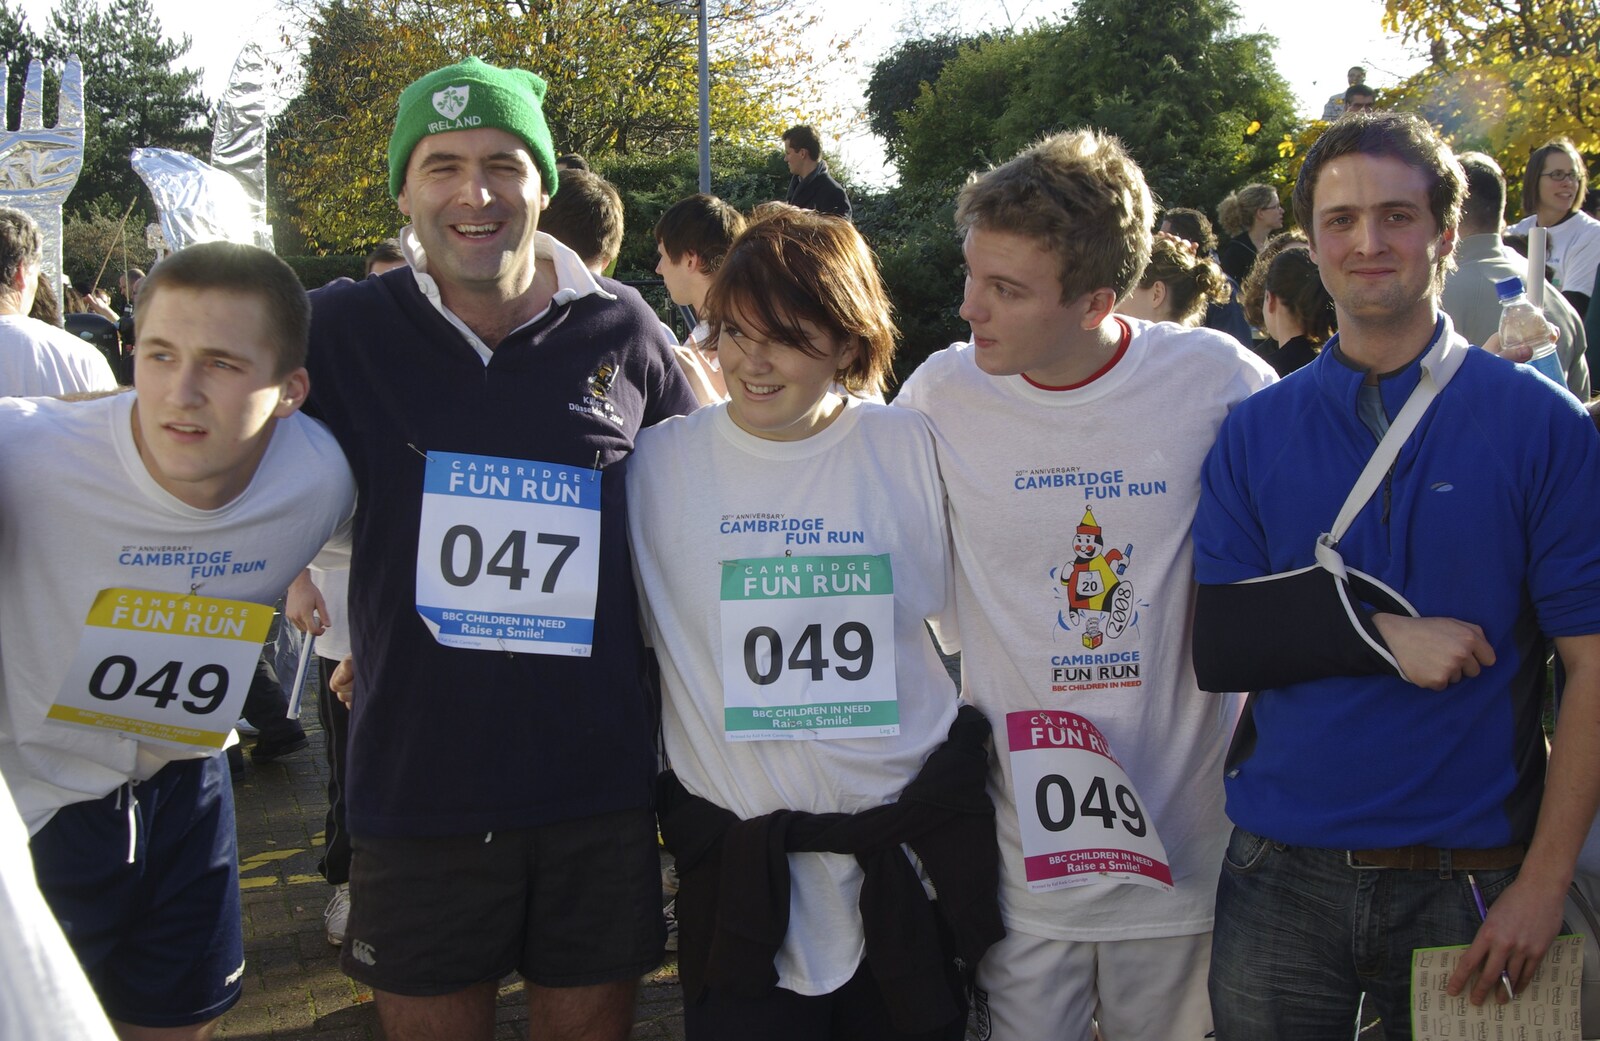 The Cambridge Fun Run, Milton Road, Cambridge - 14th November 2008: Part of Team Taptu